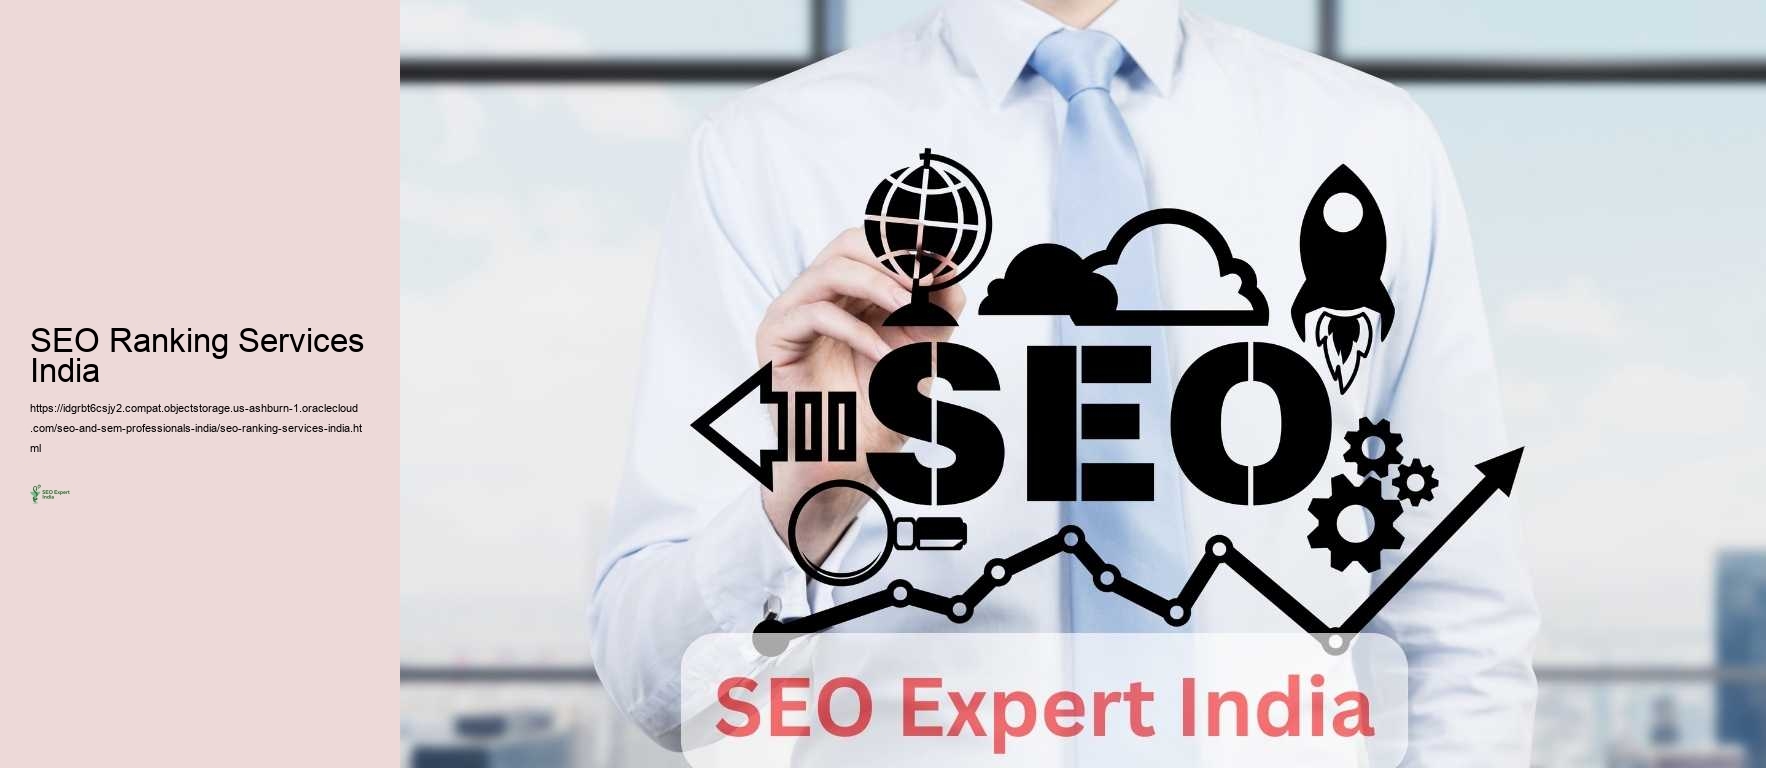 SEO Ranking Services India